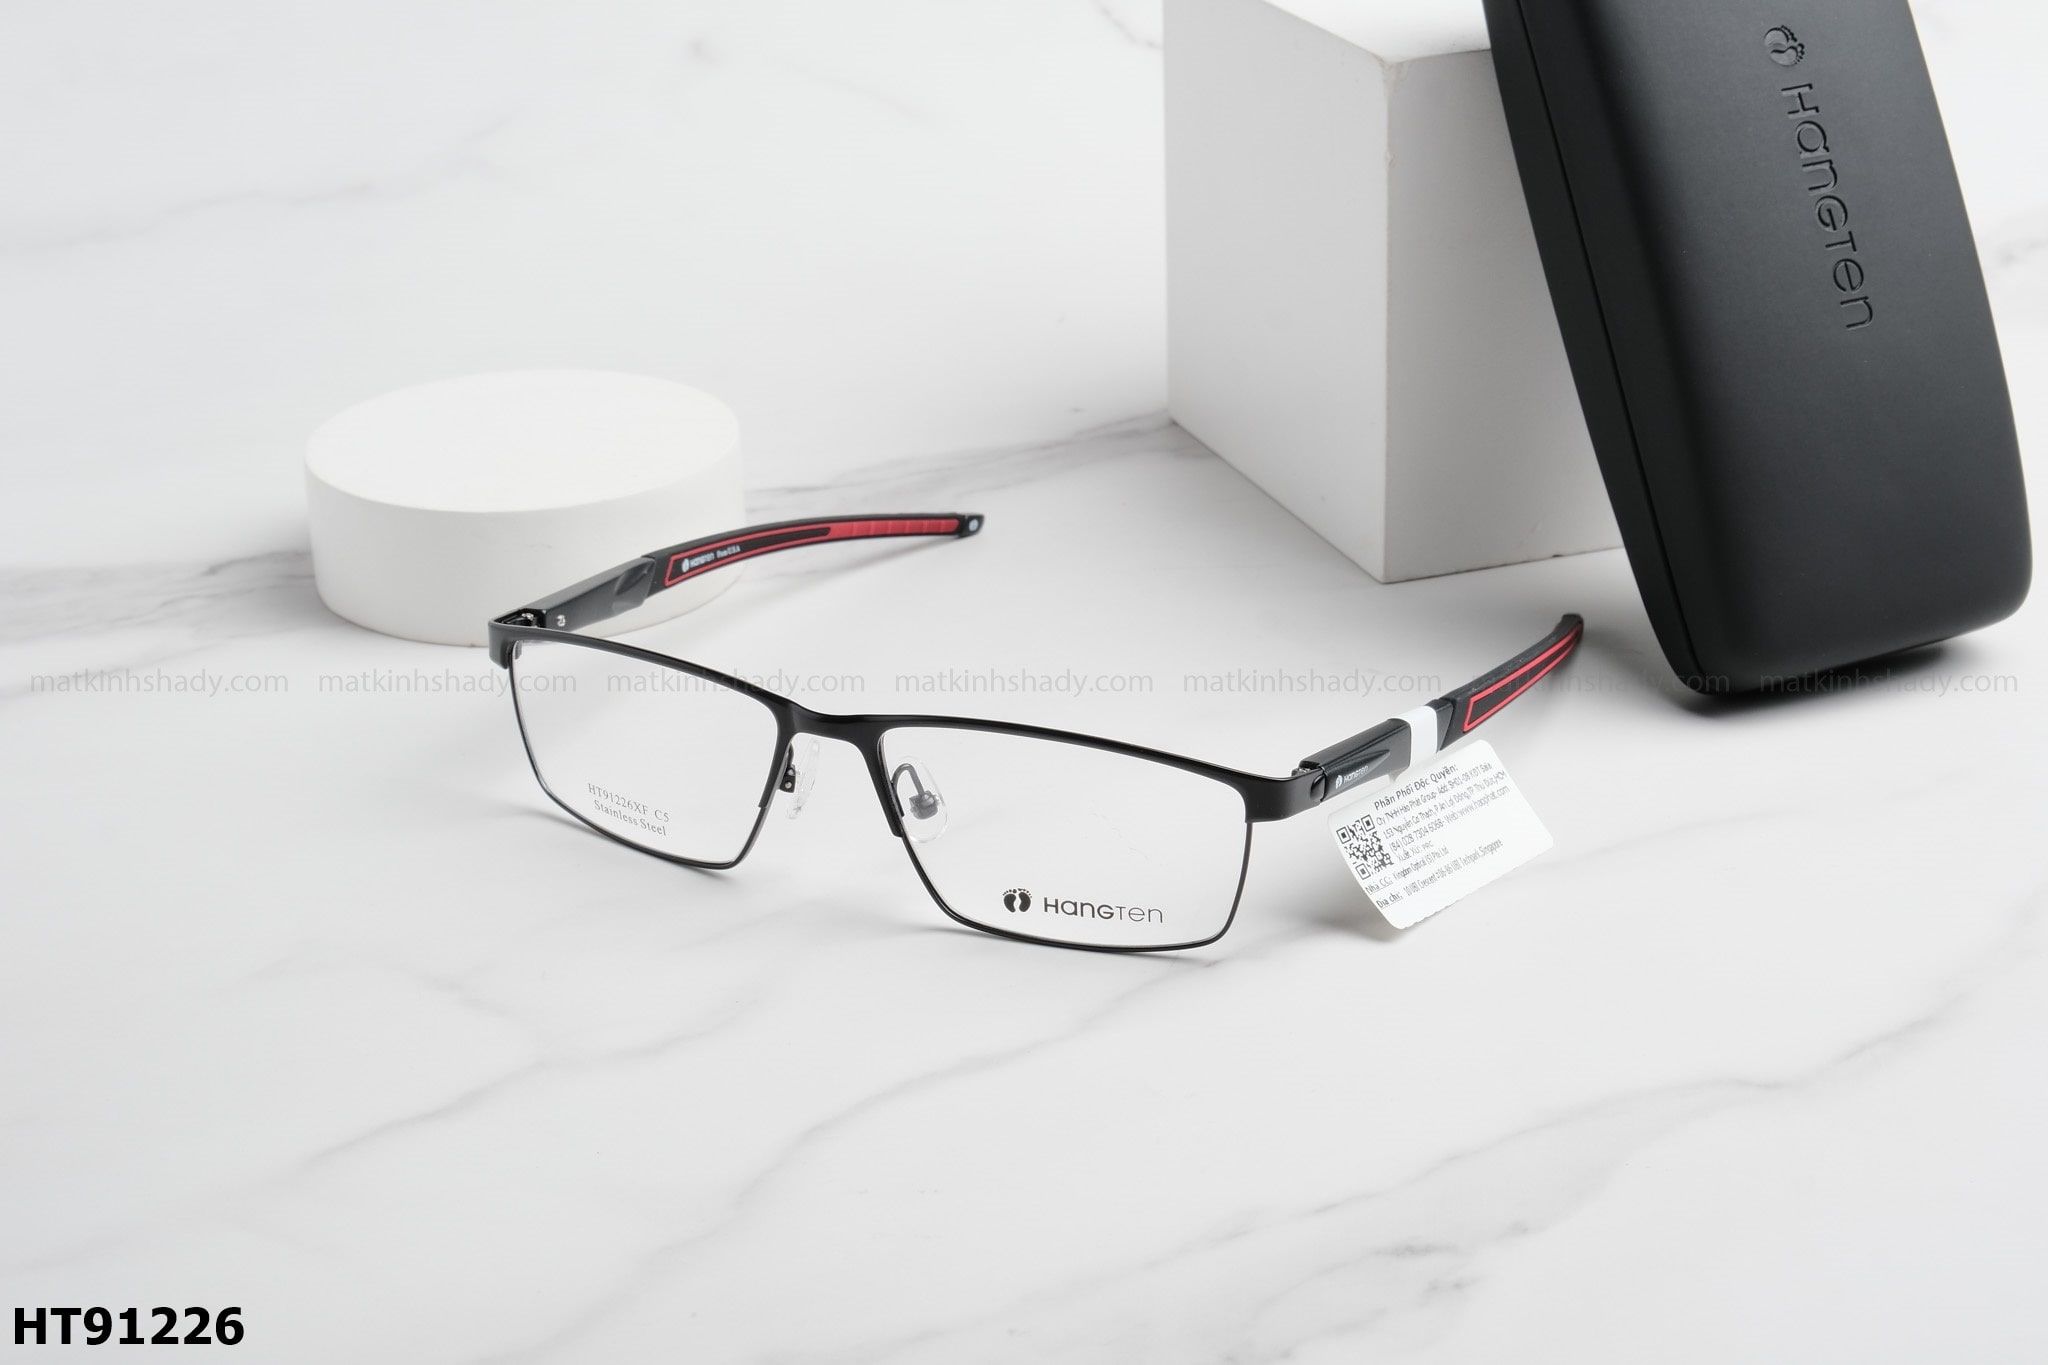  Hangten Eyewear - Glasses - HT91226 